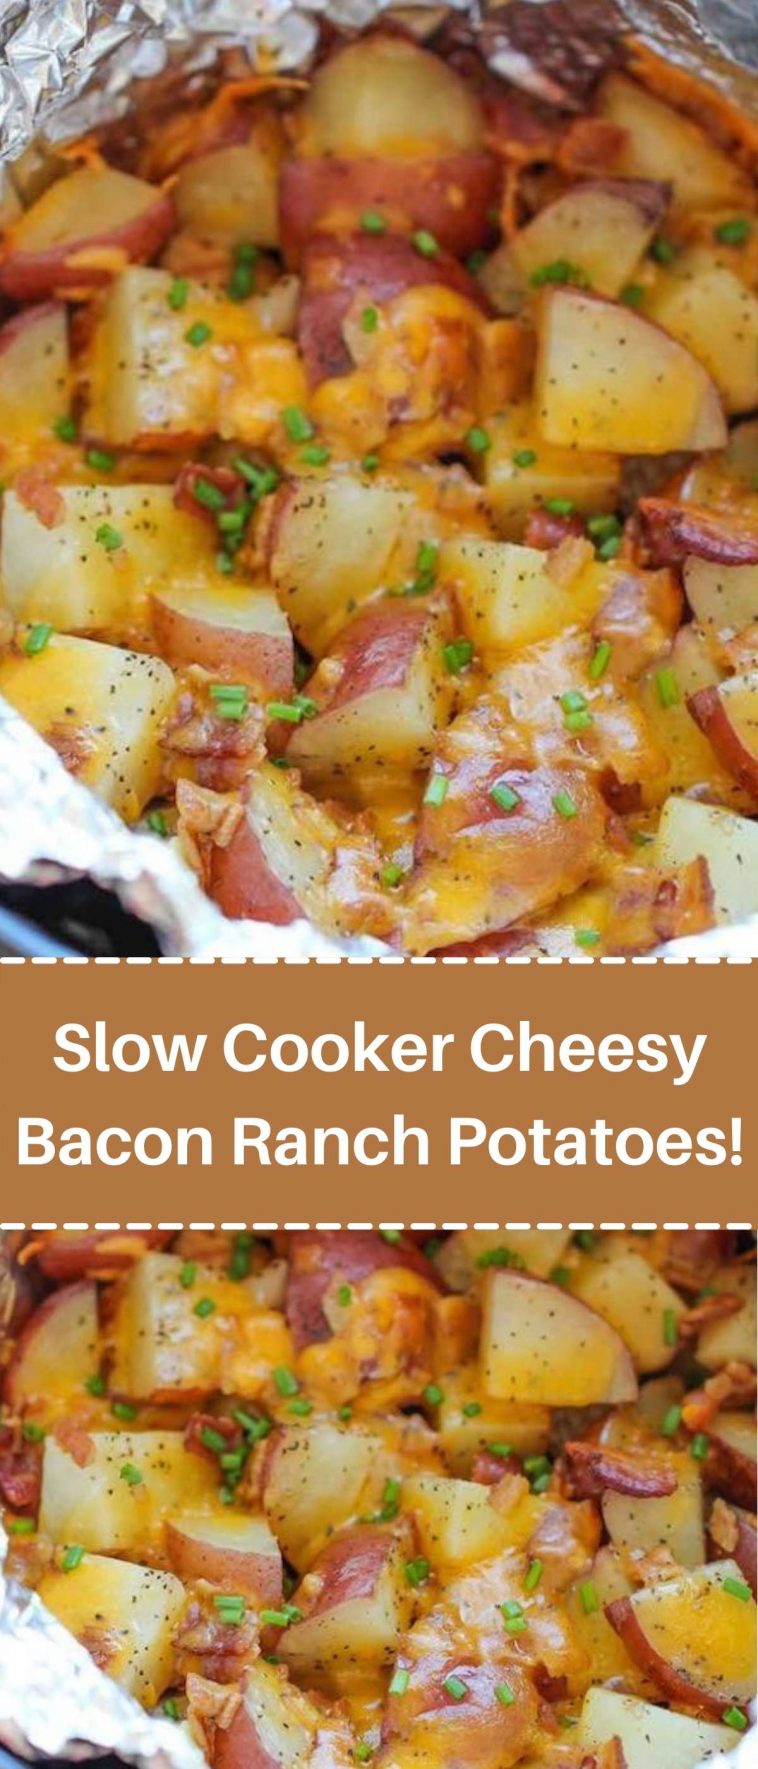 Slow Cooker Cheesy Bacon Ranch Potatoes!